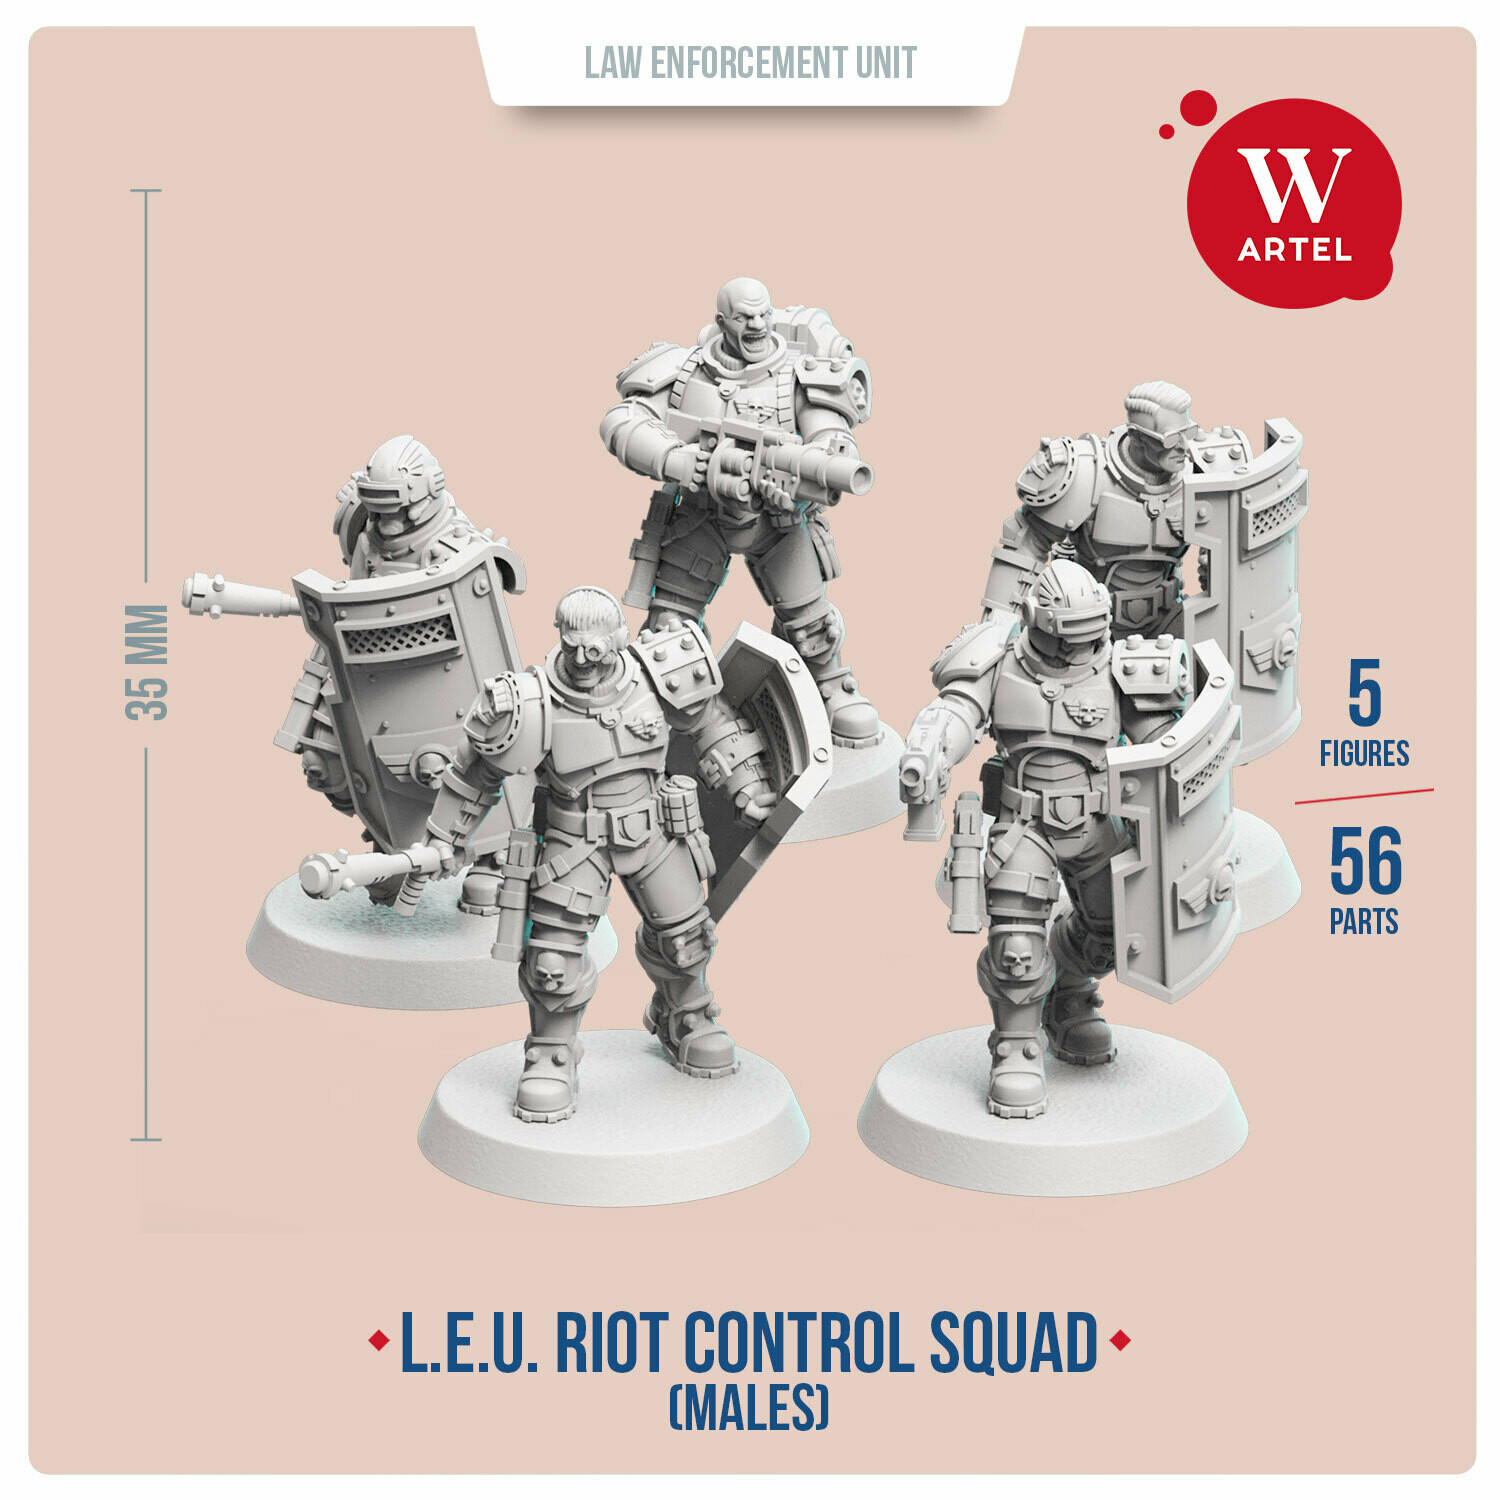 L.E.U. - Riot Control Squad (male enforcers)